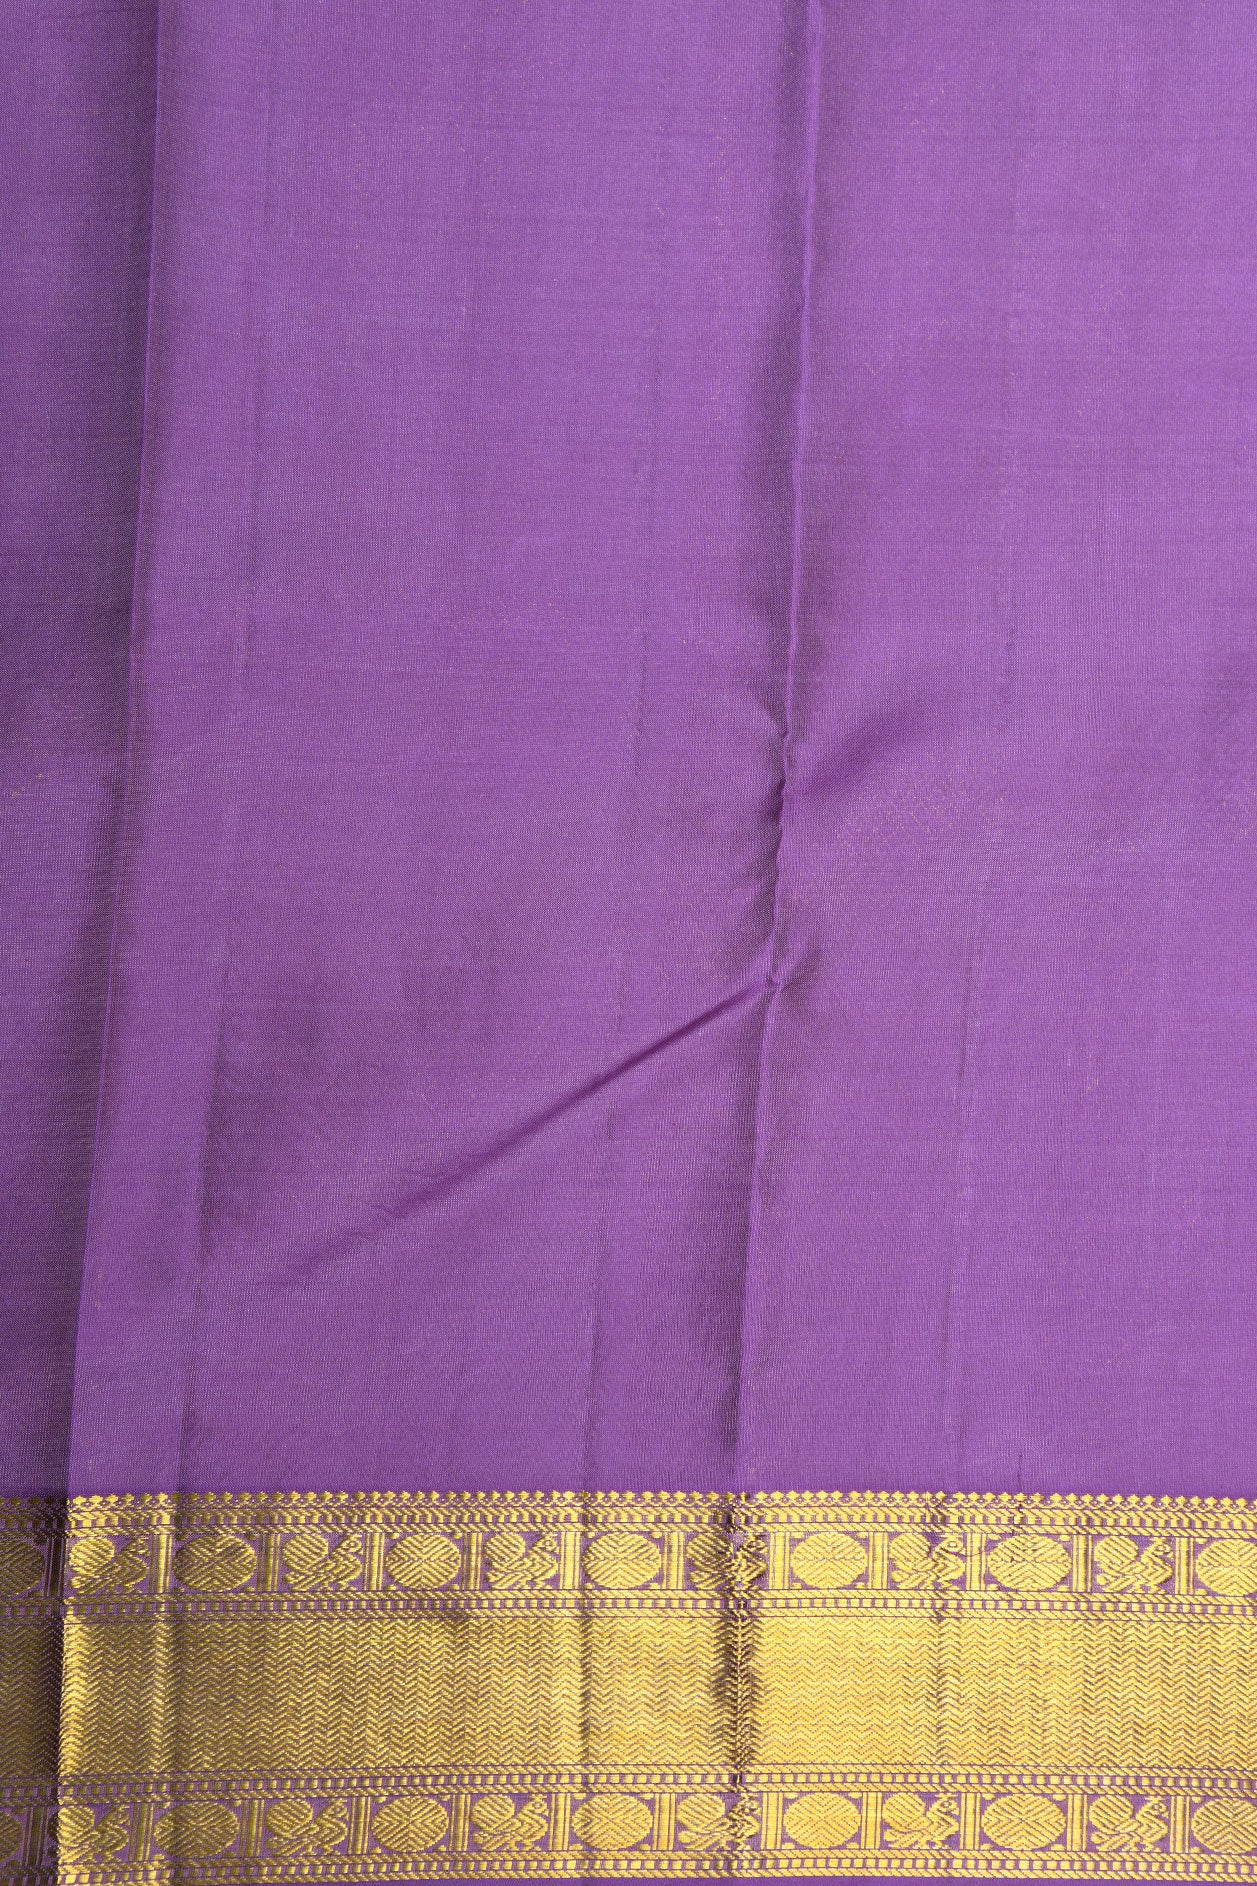 Rudraksh Zari Border In Plain Lavender Kanchipuram Silk Saree